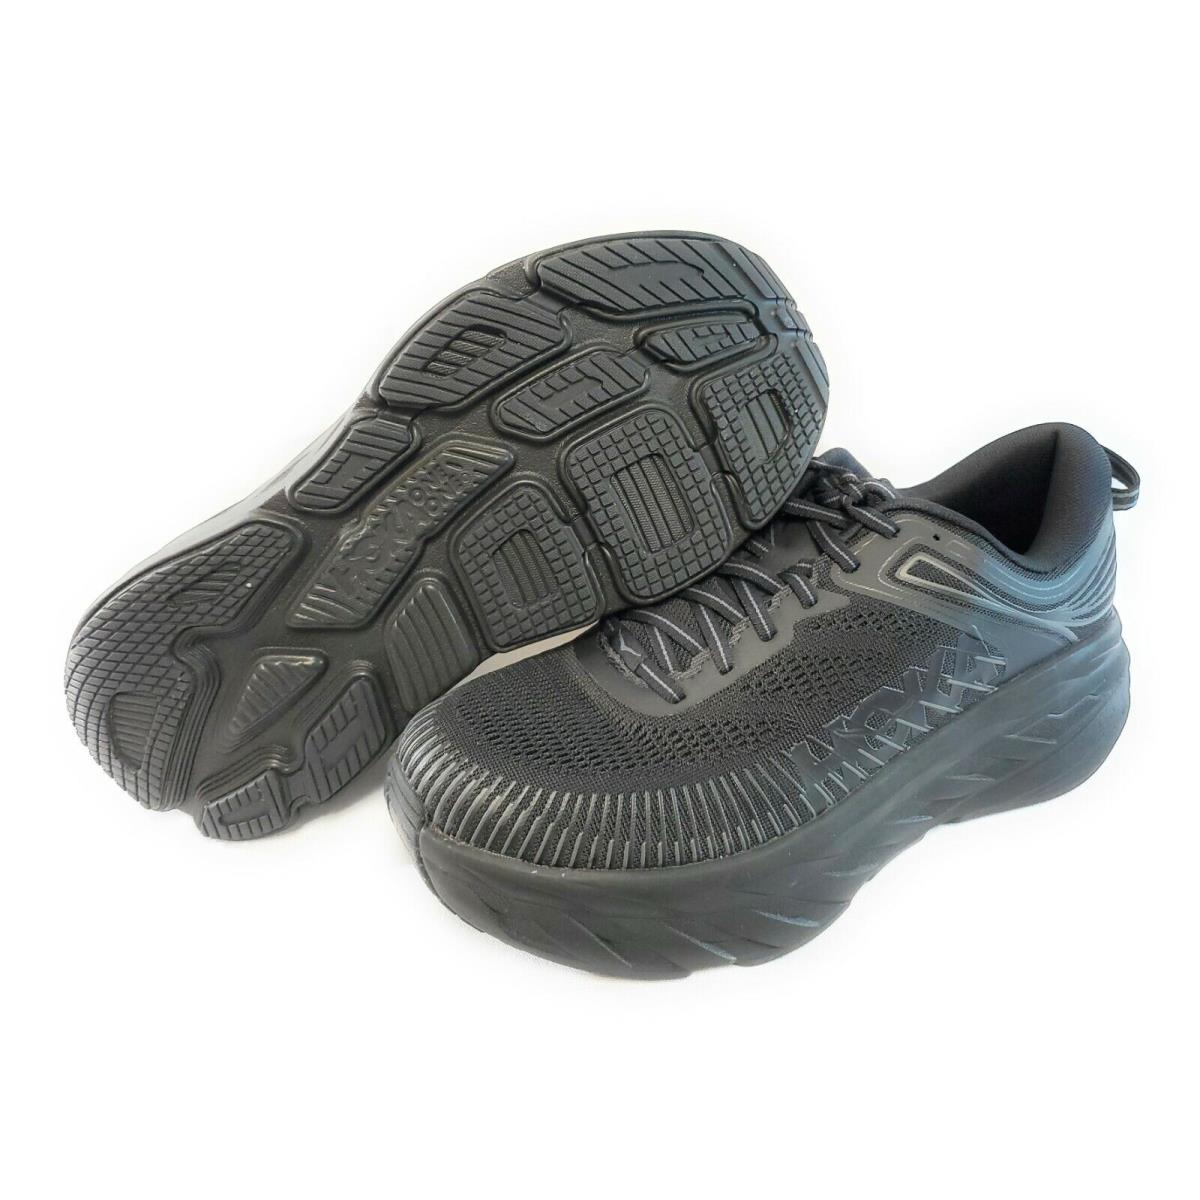 Womens Hoka One One Bondi 7 Wide 1110531 Bblc Black Running Sneakers Shoes